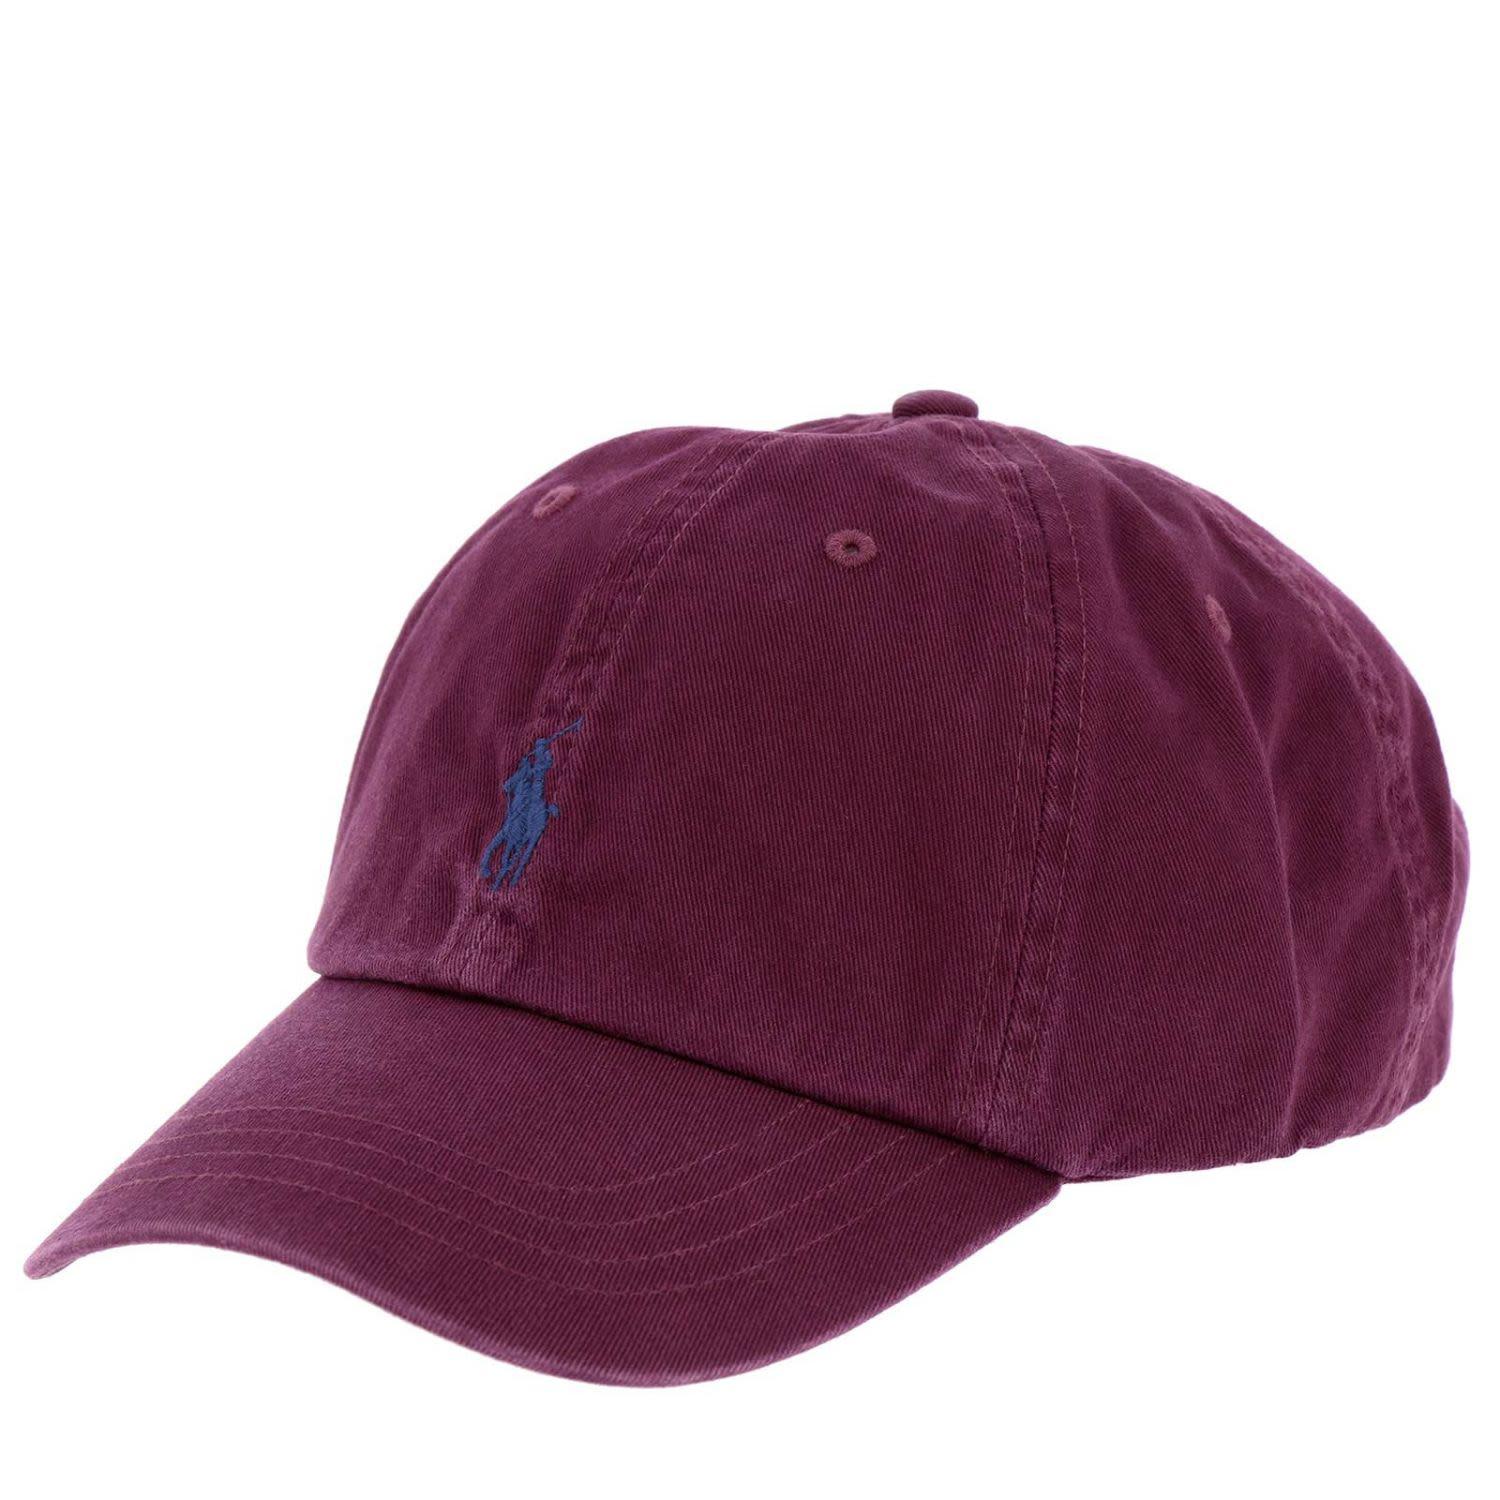 burgundy polo hat